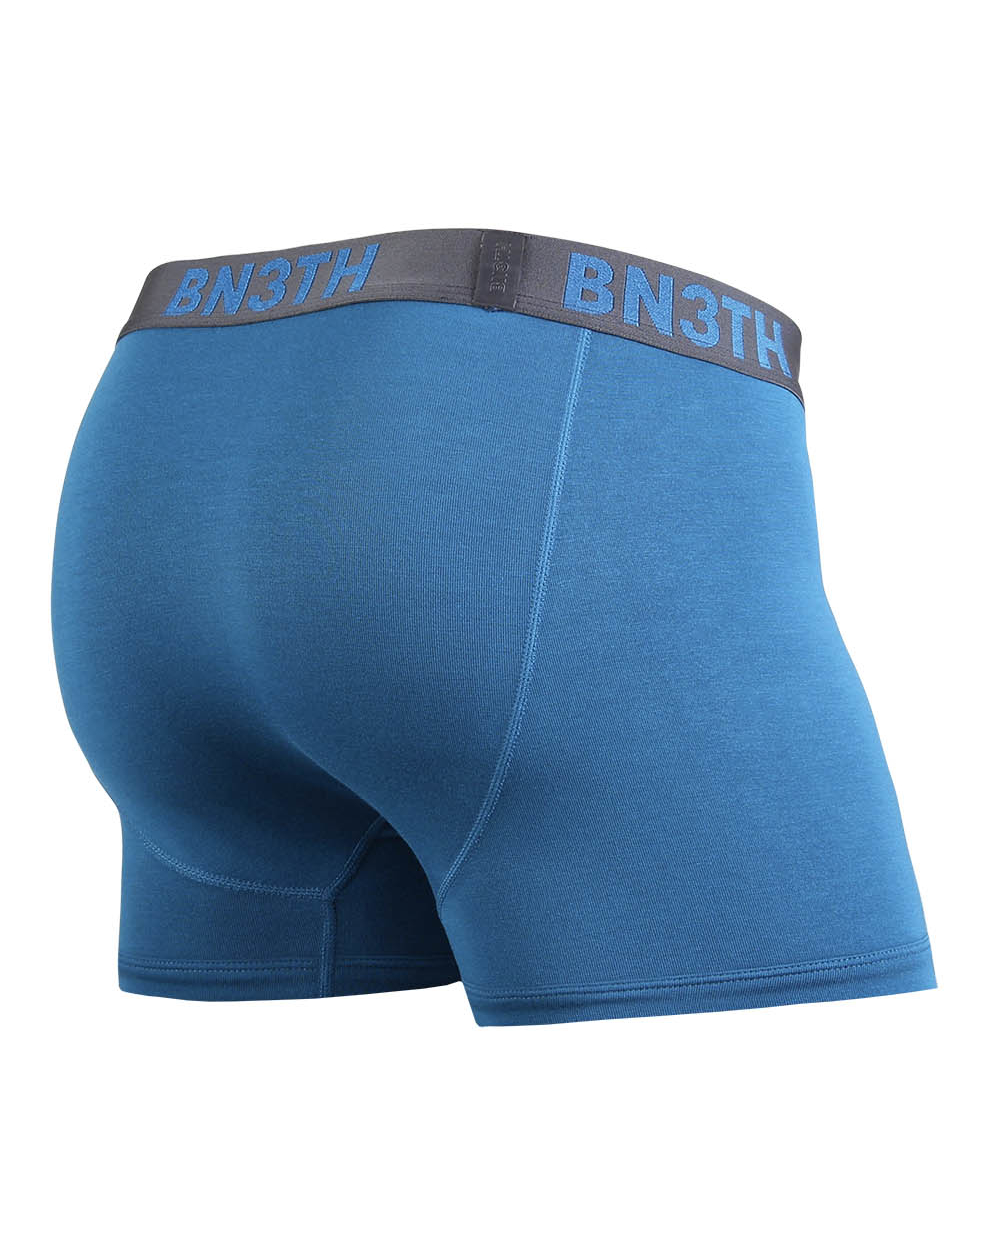 nice color Teal Slate BN3TH underwear